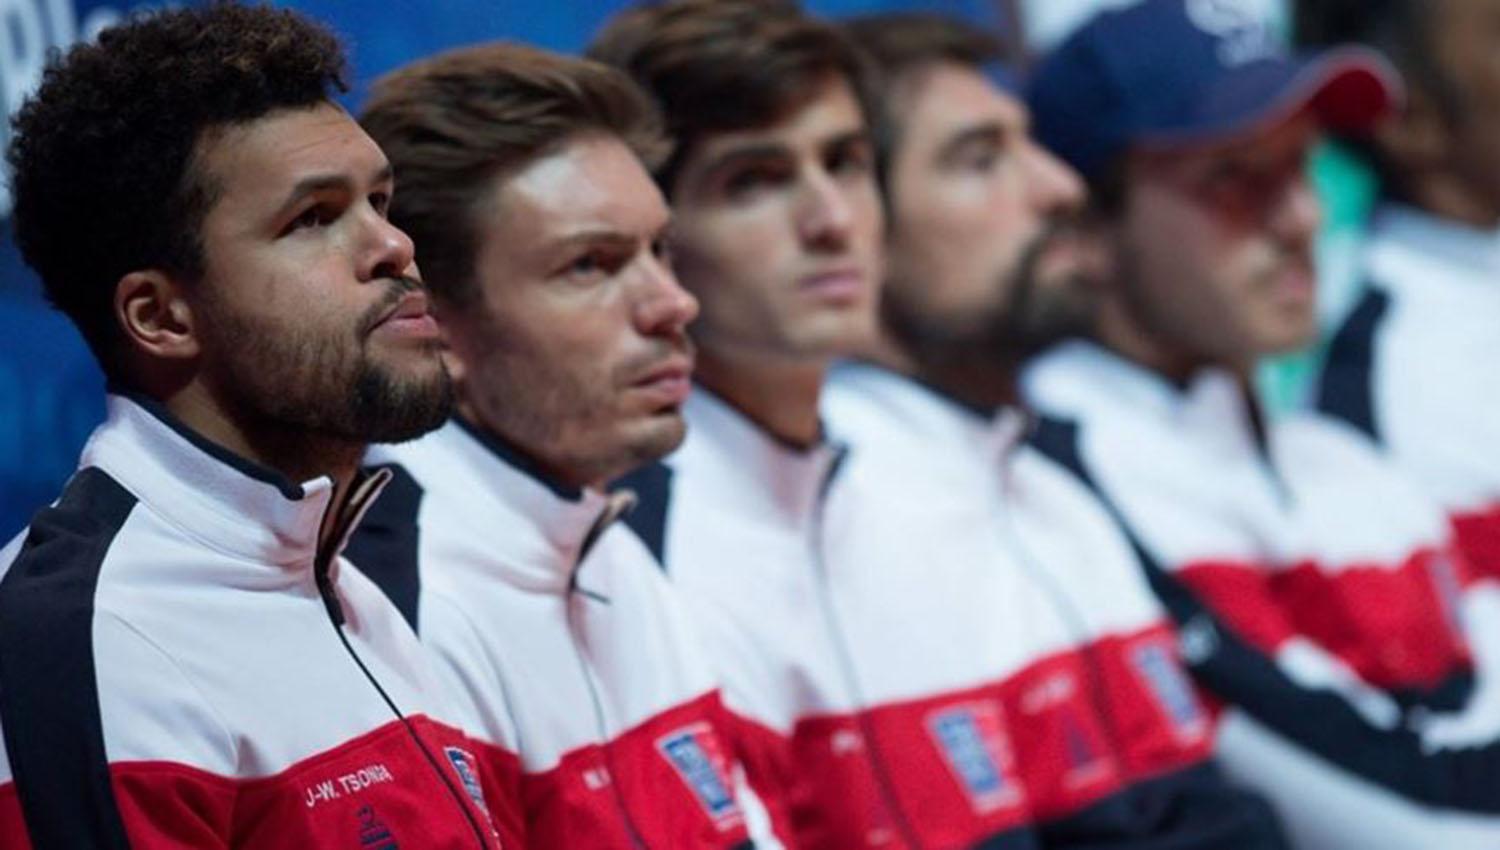 El equipo francés de la Copa Davis, cuyo capitán es Yannick Noah. (FOTO TOMADA DE TWITTER @CopaDavis)